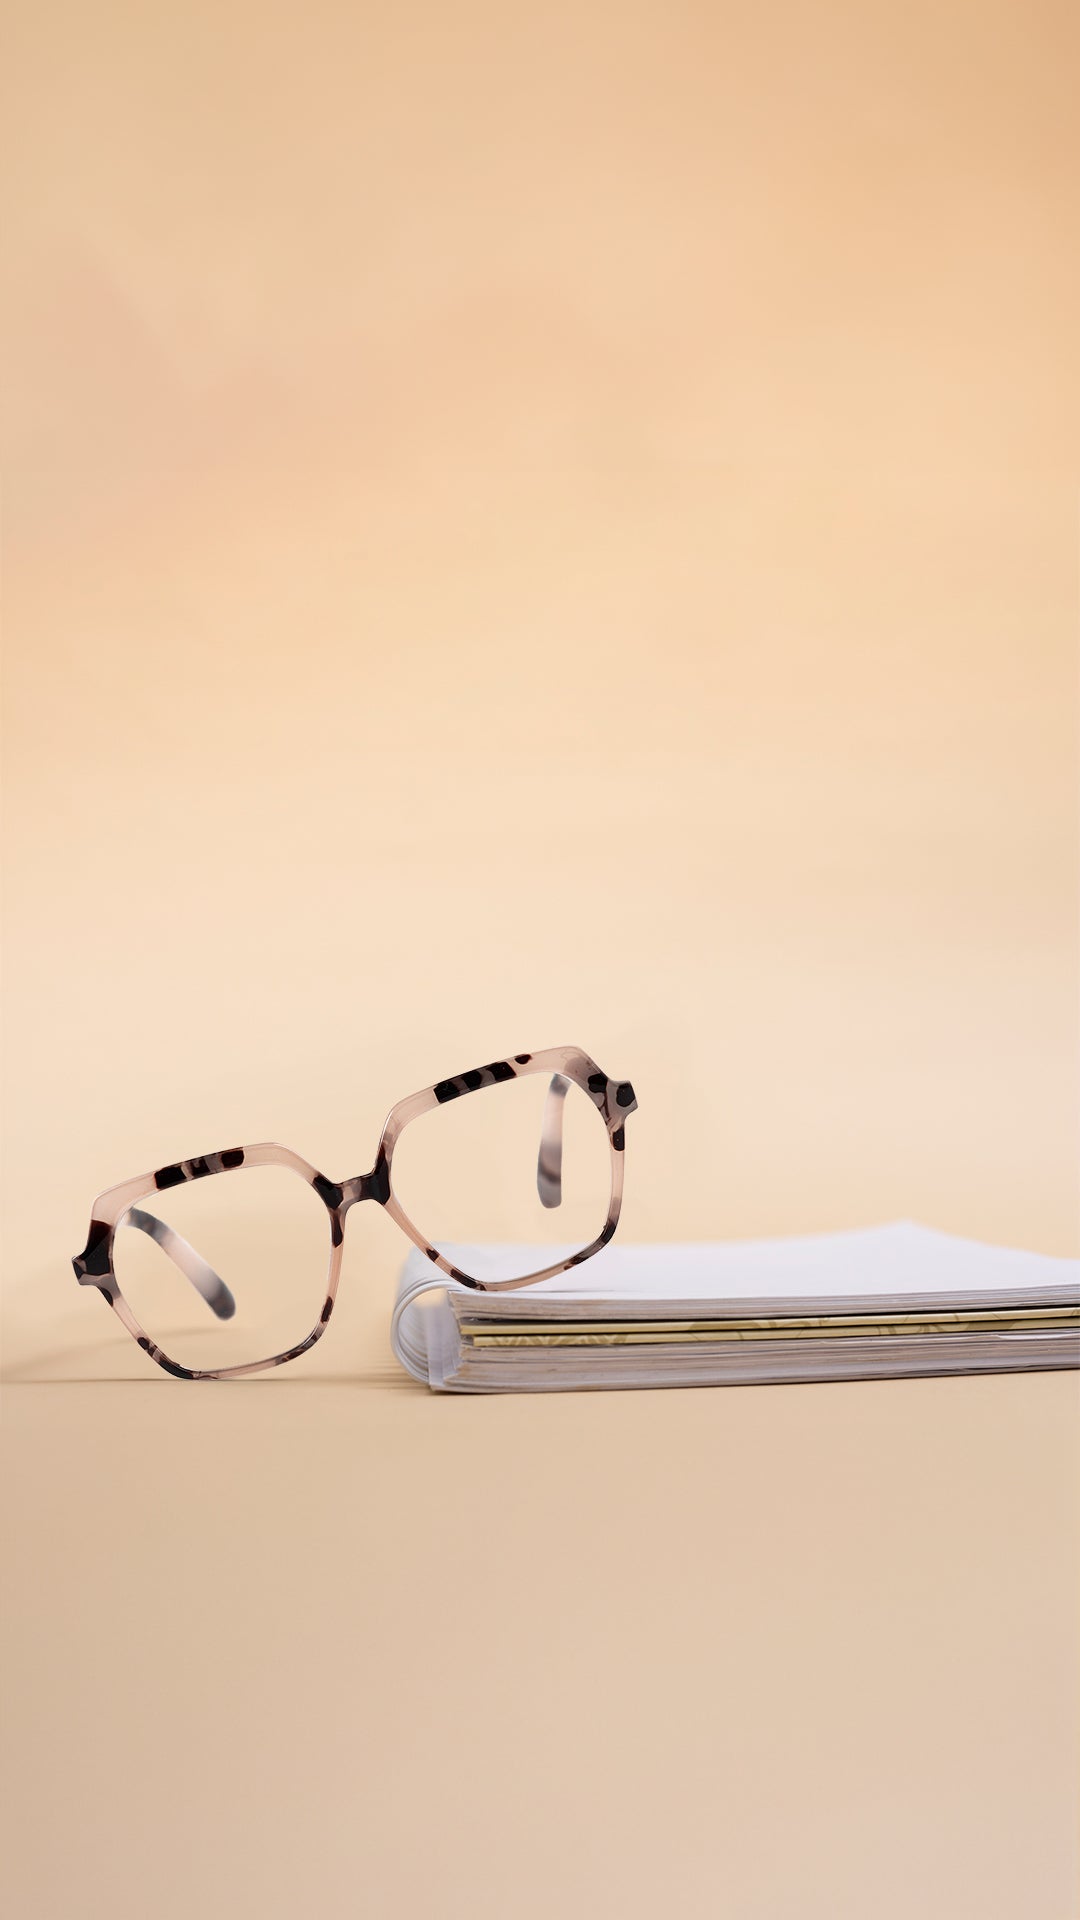 Square beige reading glasses with tortoiseshell pattern